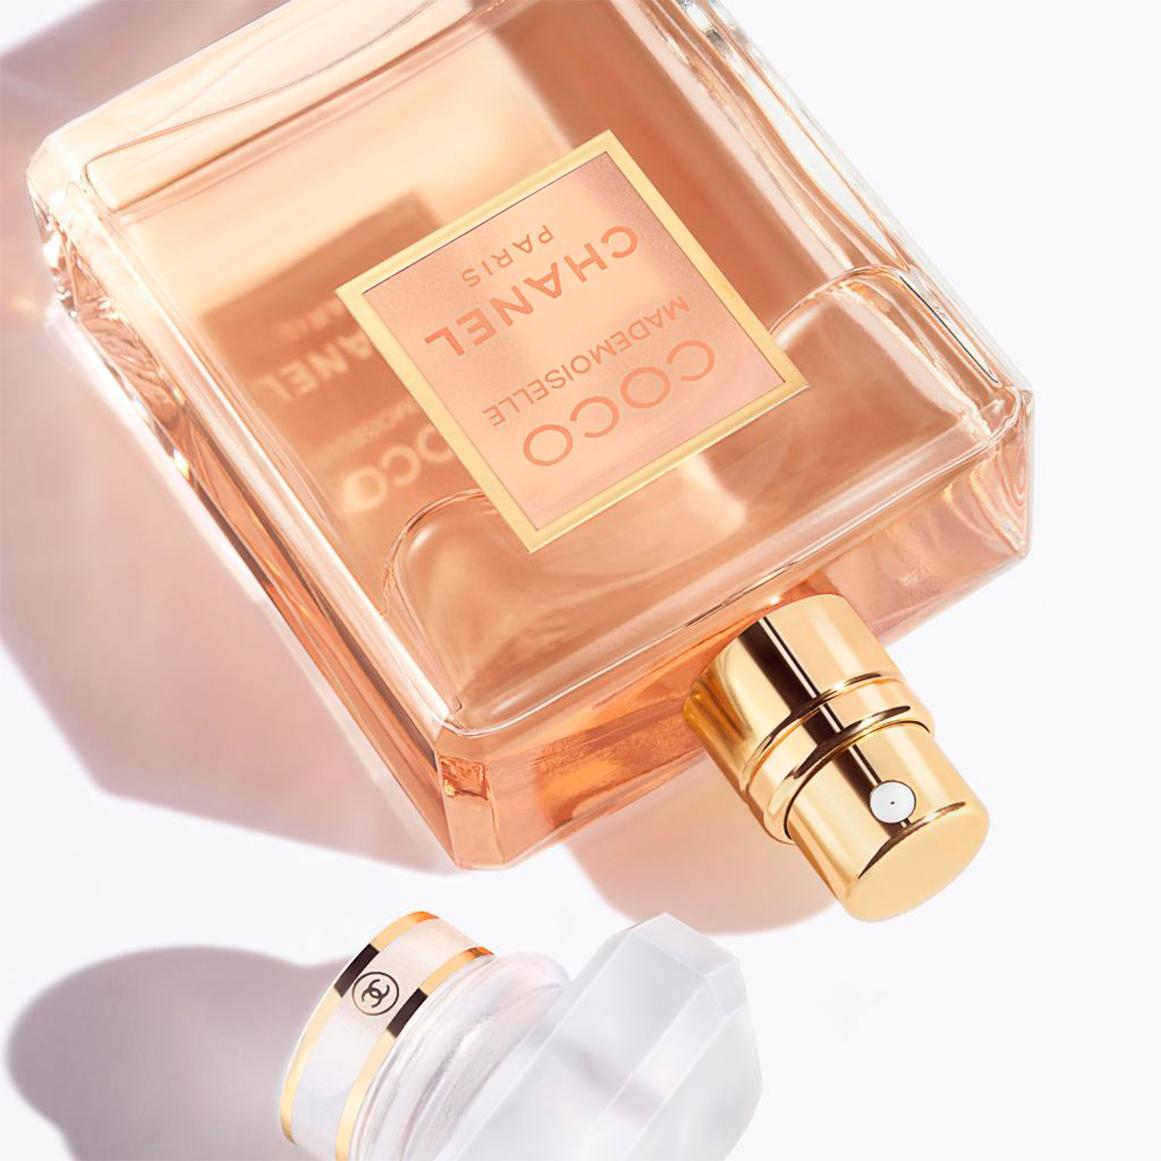  Chanel Coco Perfume - EDT Spray 3.4 oz. by Chanel - Women's :  Eau De Toilettes : Beauty & Personal Care